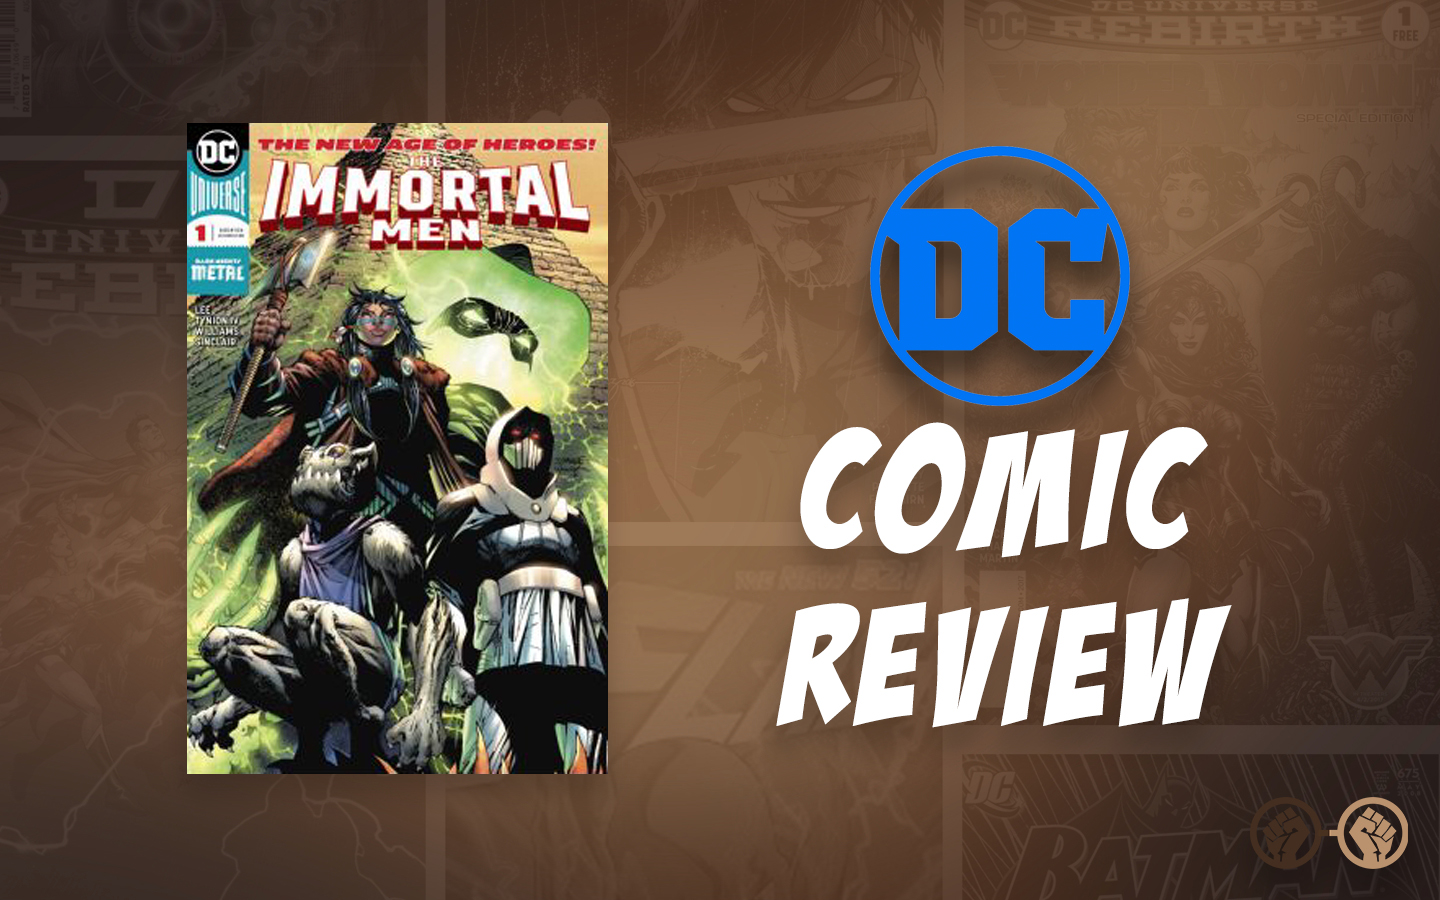 The Immortal Men #1 Review